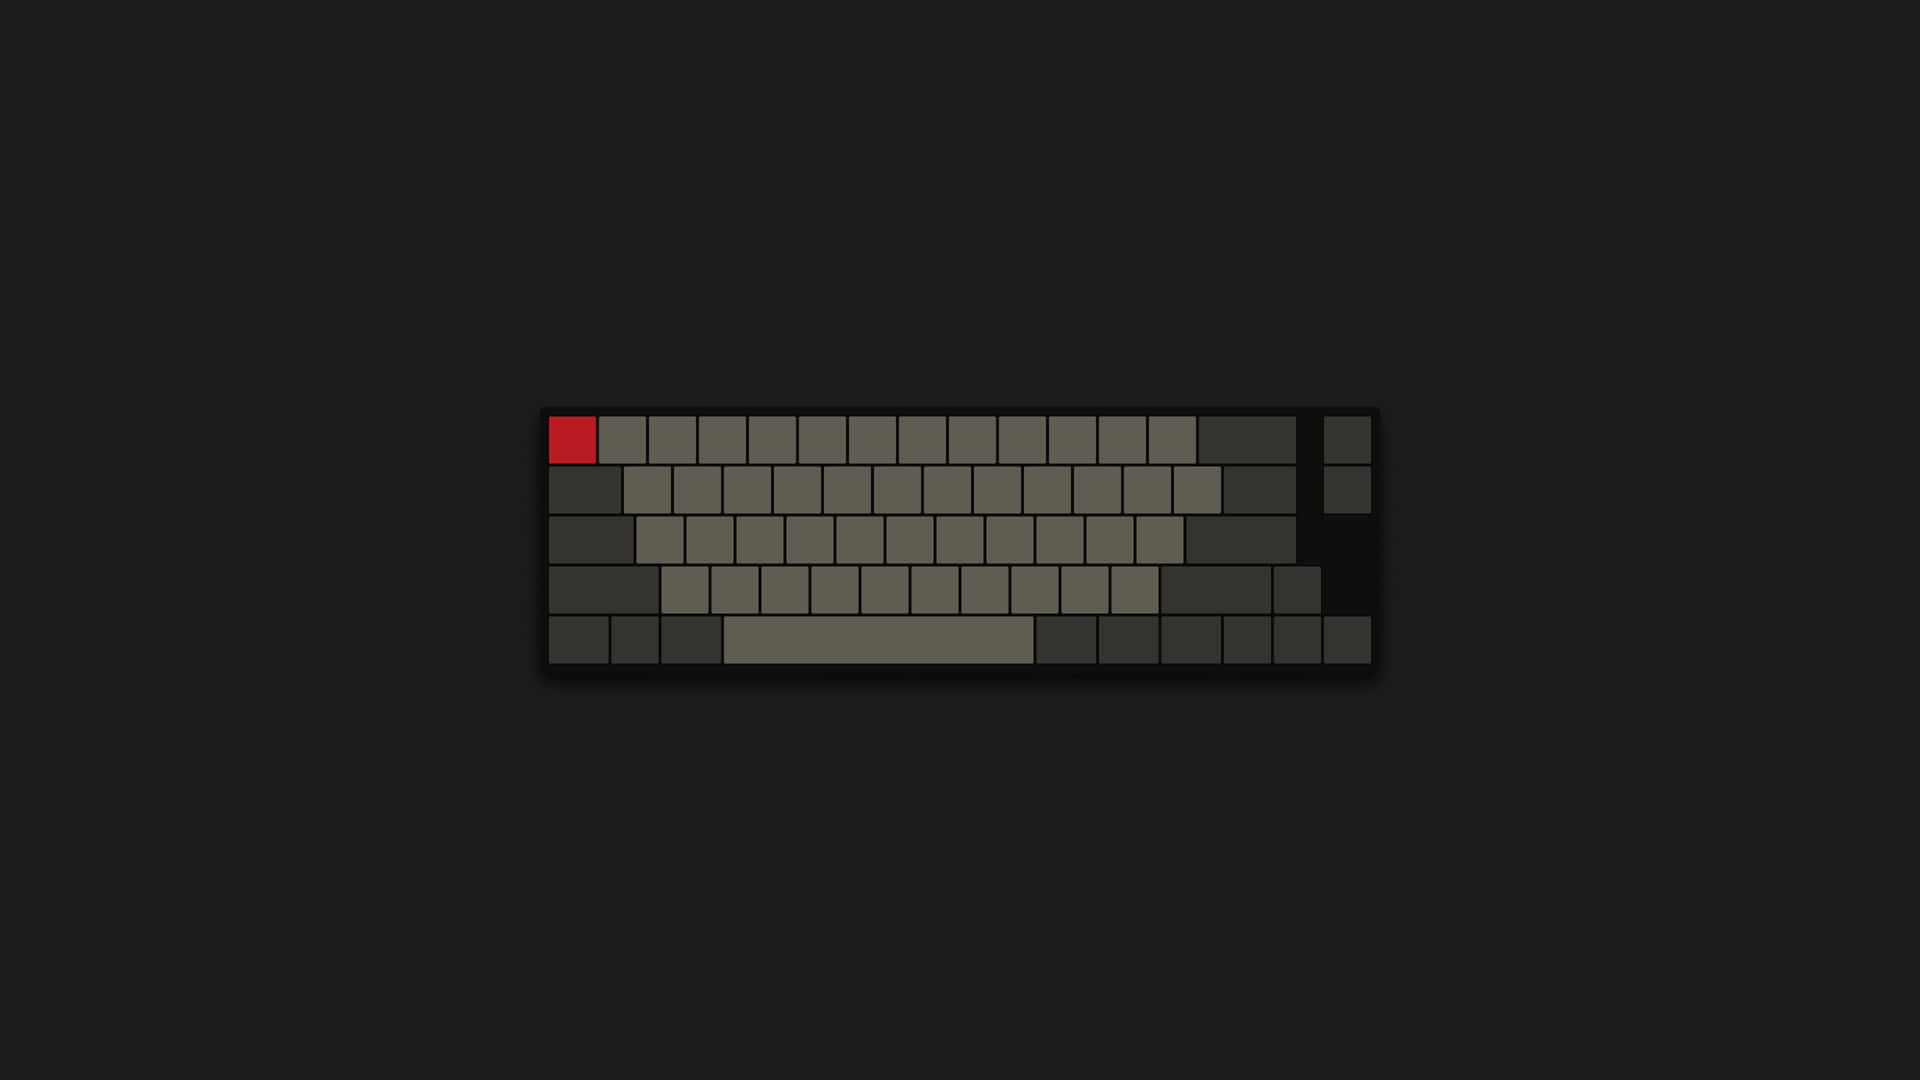 A Black Keyboard With Red Keys On It